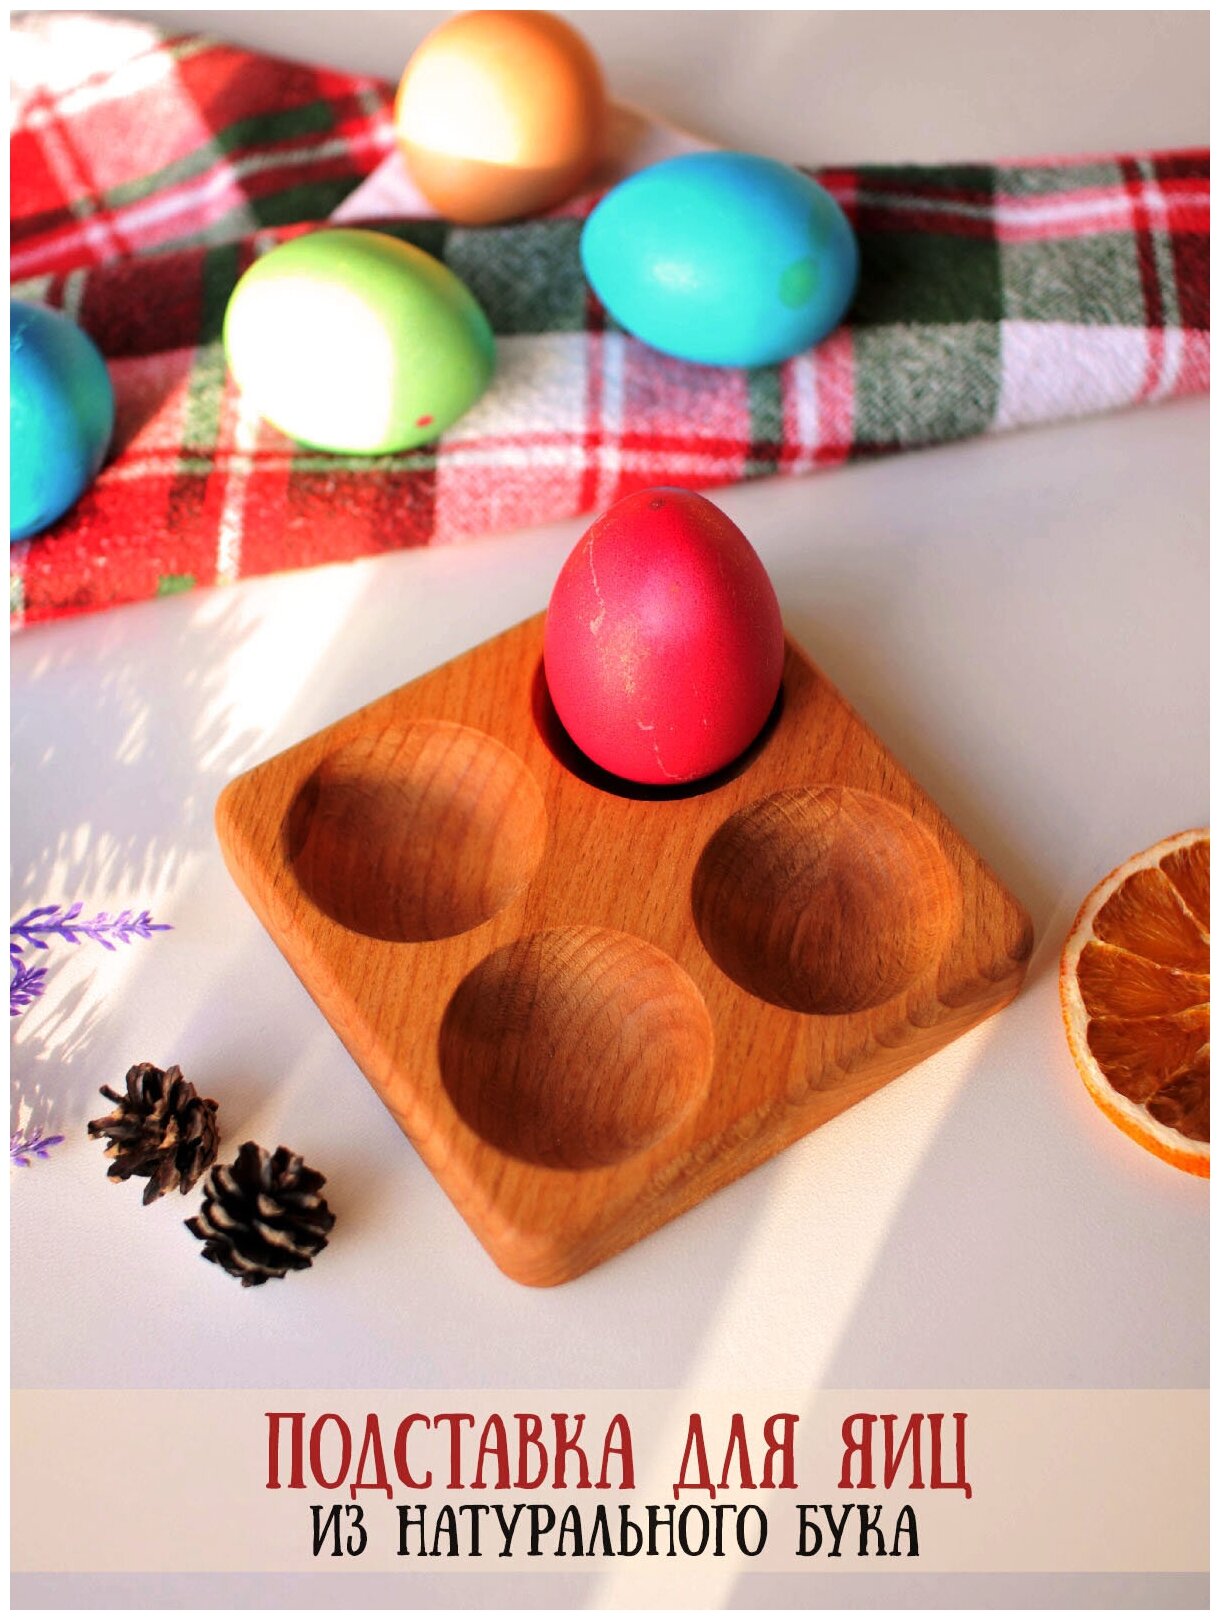 Подставка для яиц деревянная 4 секции, подставка для пасхальных яиц, пасха, бук